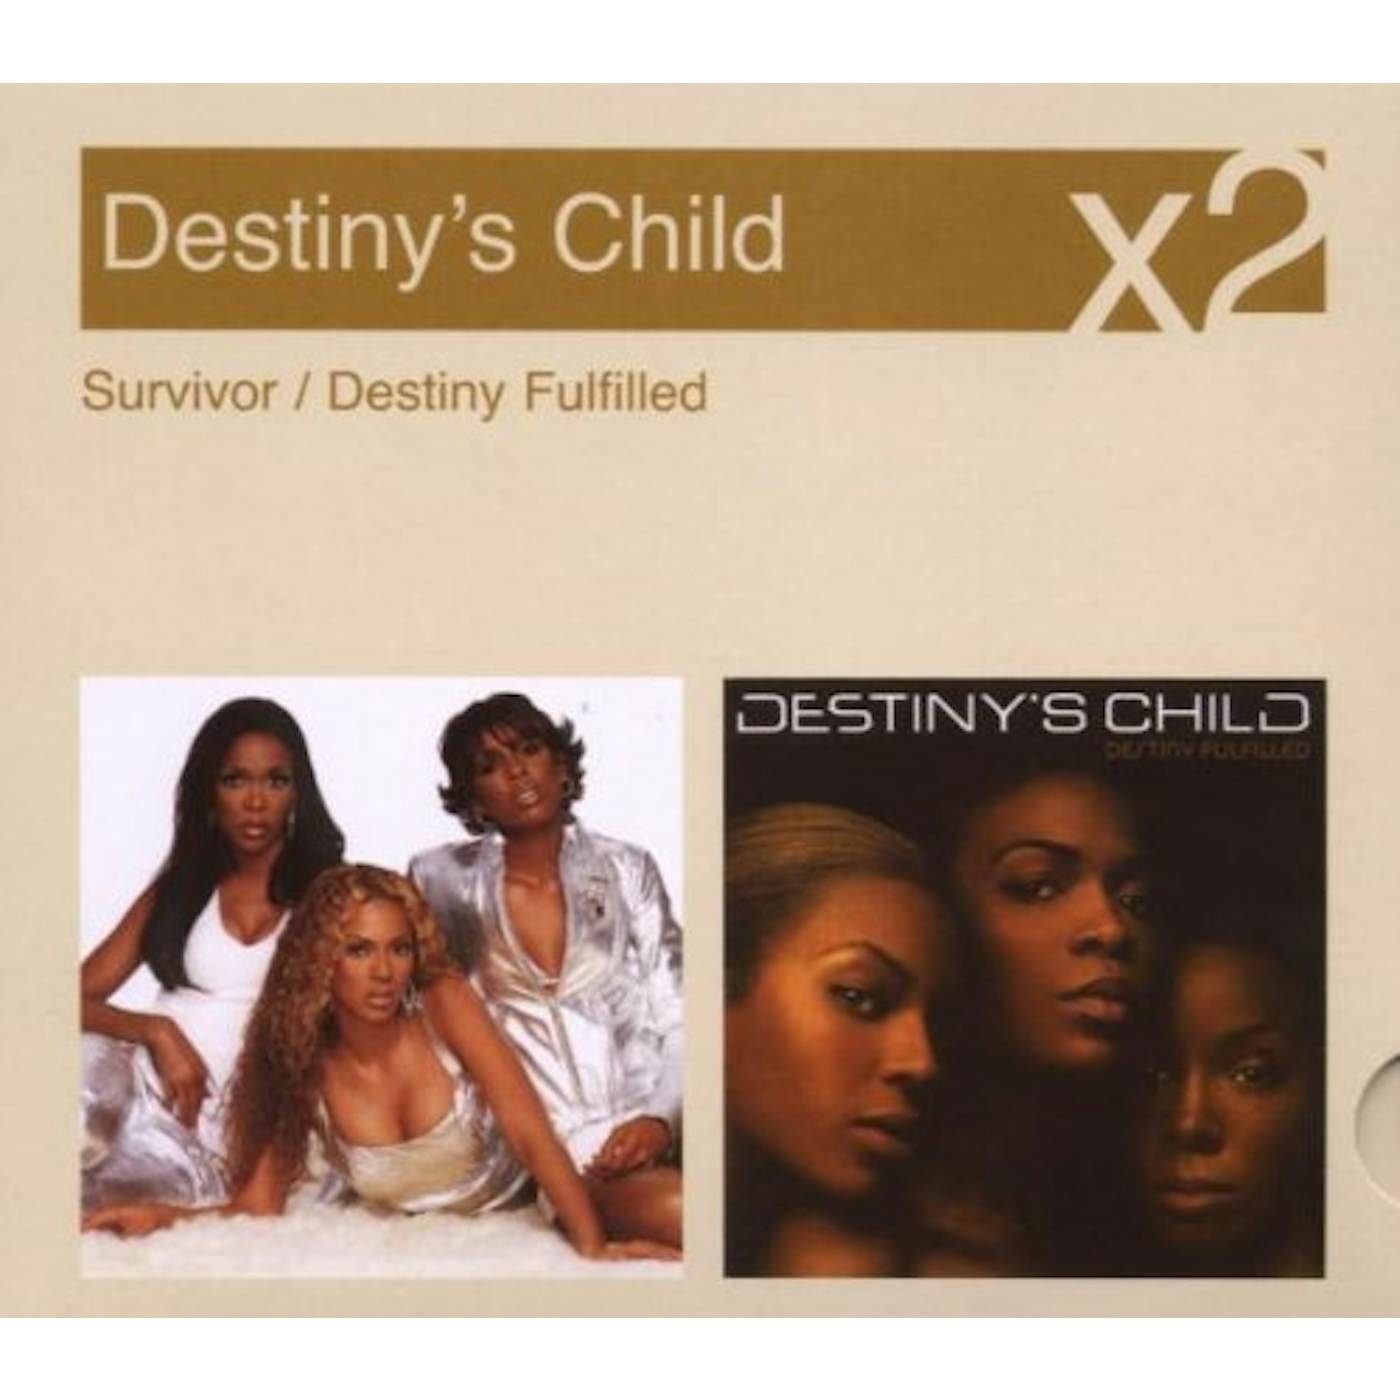 Destiny's Child SURVIVOR / DESTINY FULFILLED CD